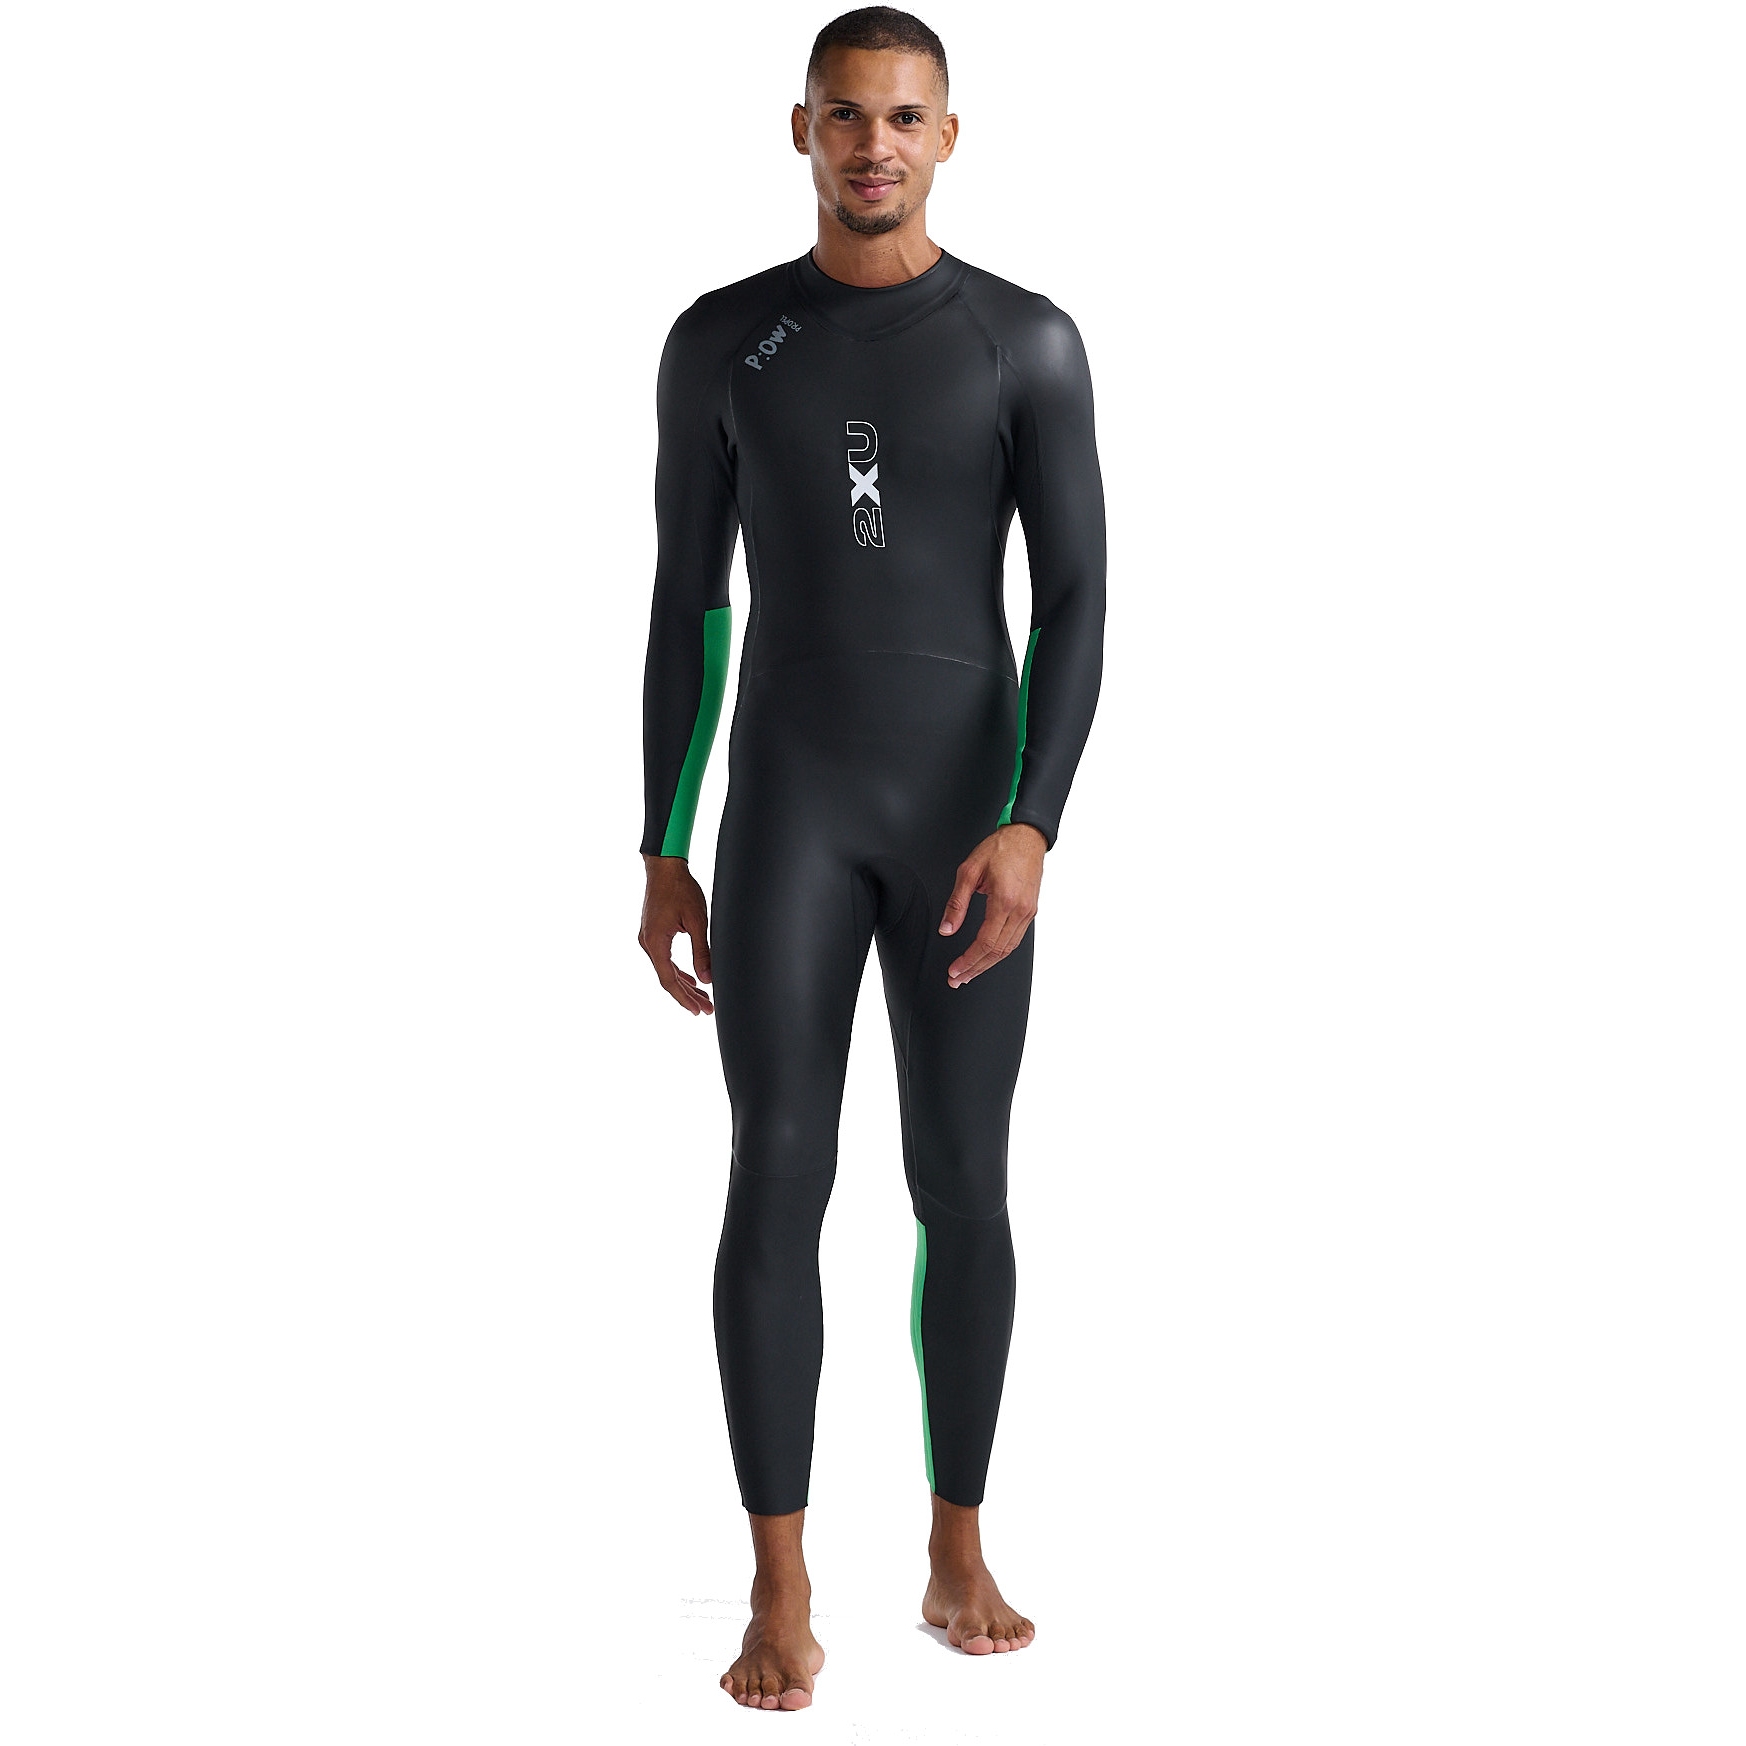 Produktbild von 2XU Propel Open Water Wetsuit Herren - black/bright green